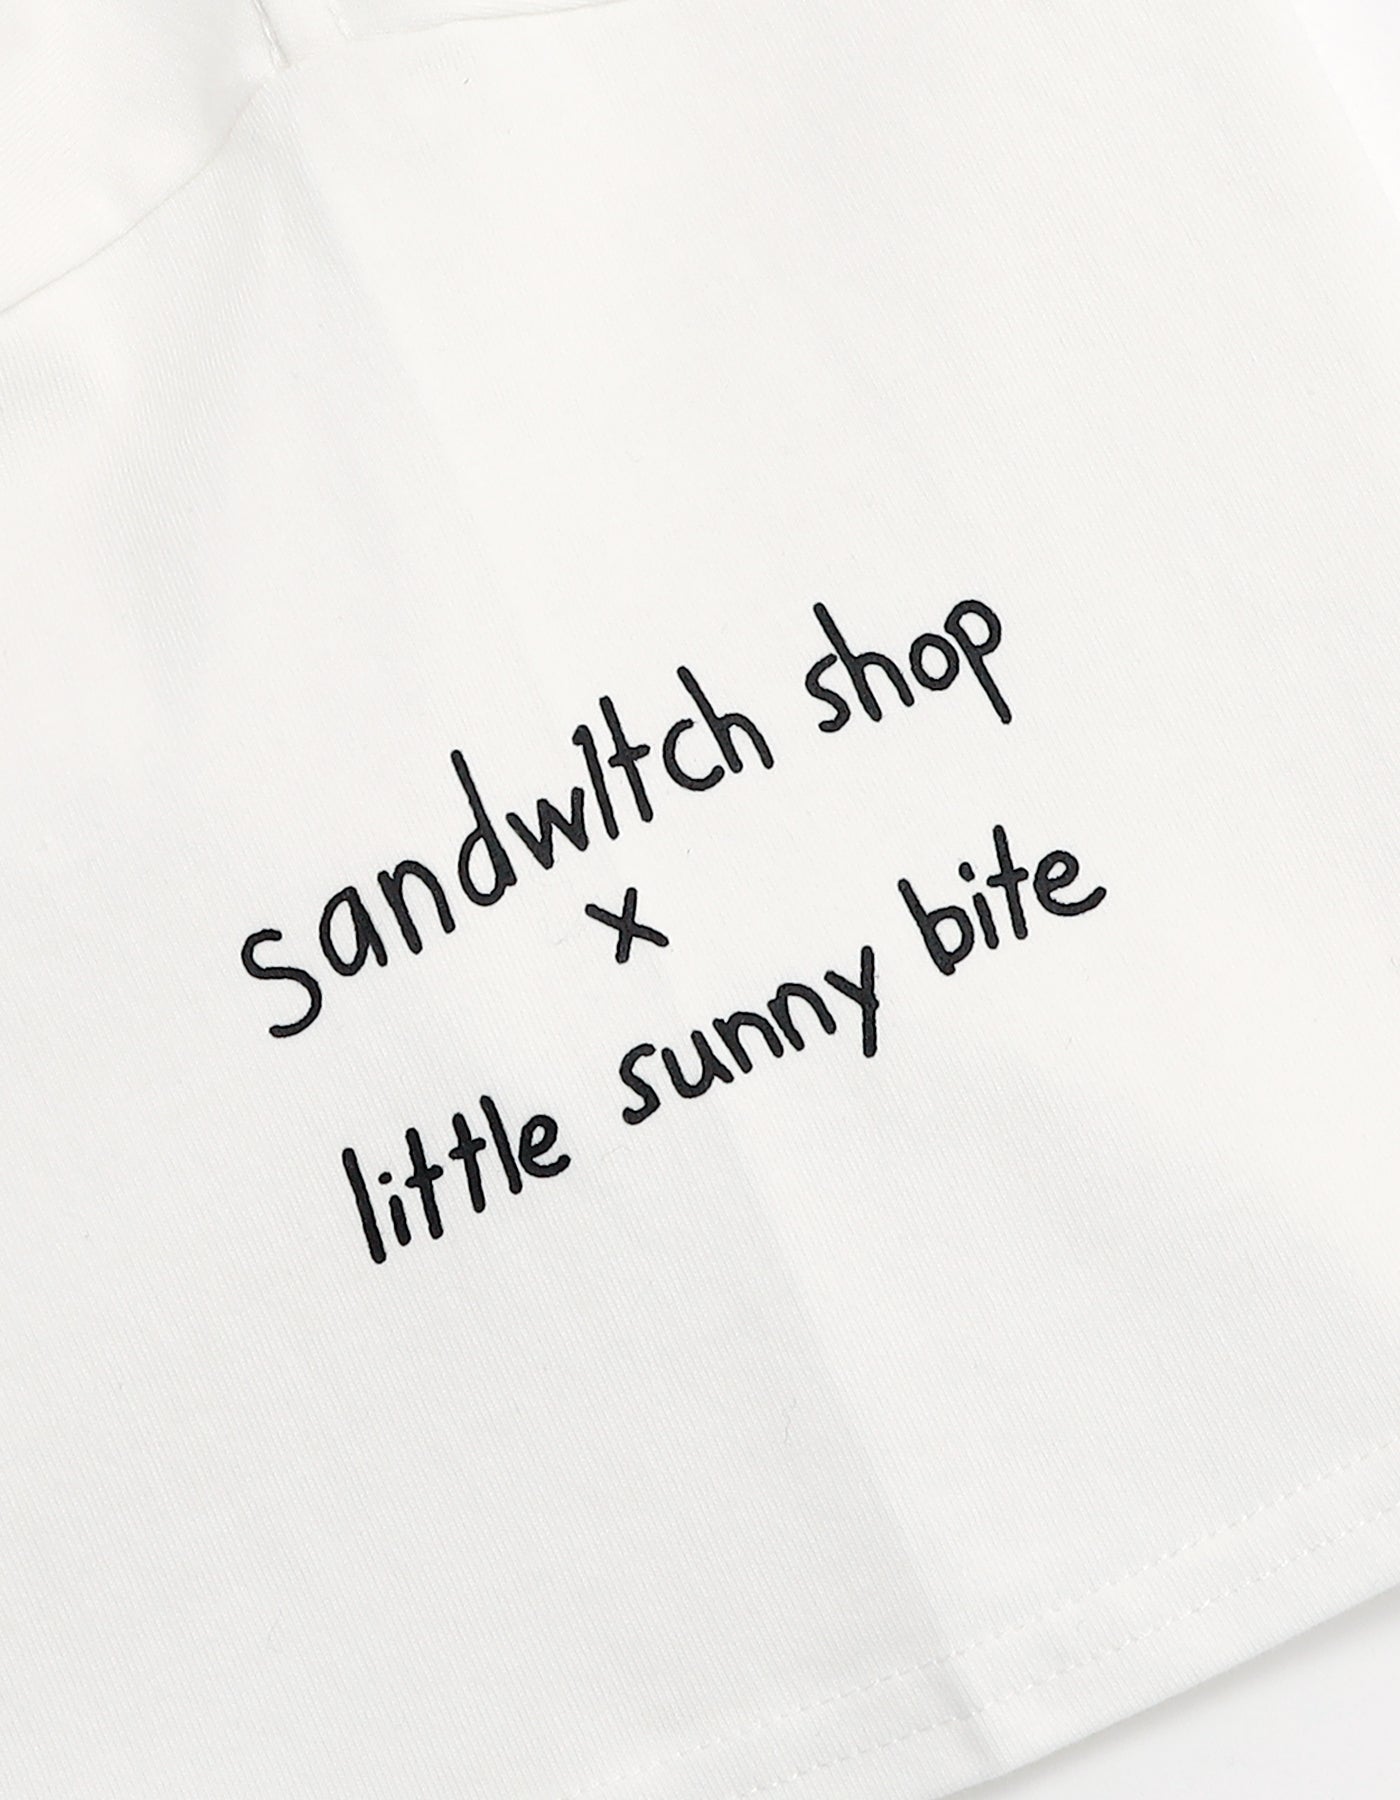 sandw1tch shop x little sunny bite tee / WHITE